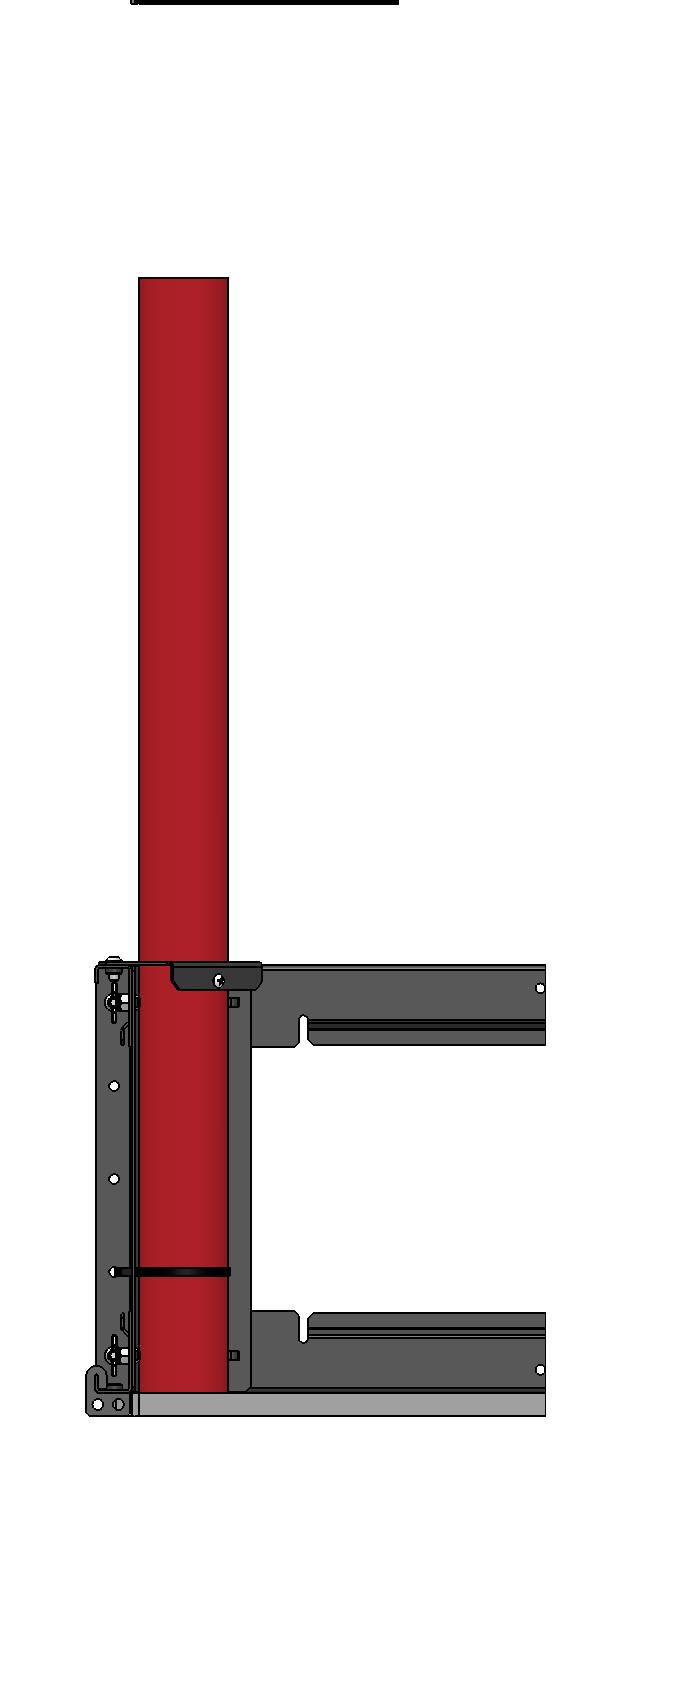 Vertical Hanging Bar Specs: 1.300 2.375 O.D. 2.047 I.D. NOTE: Use a #10-24 x 0.